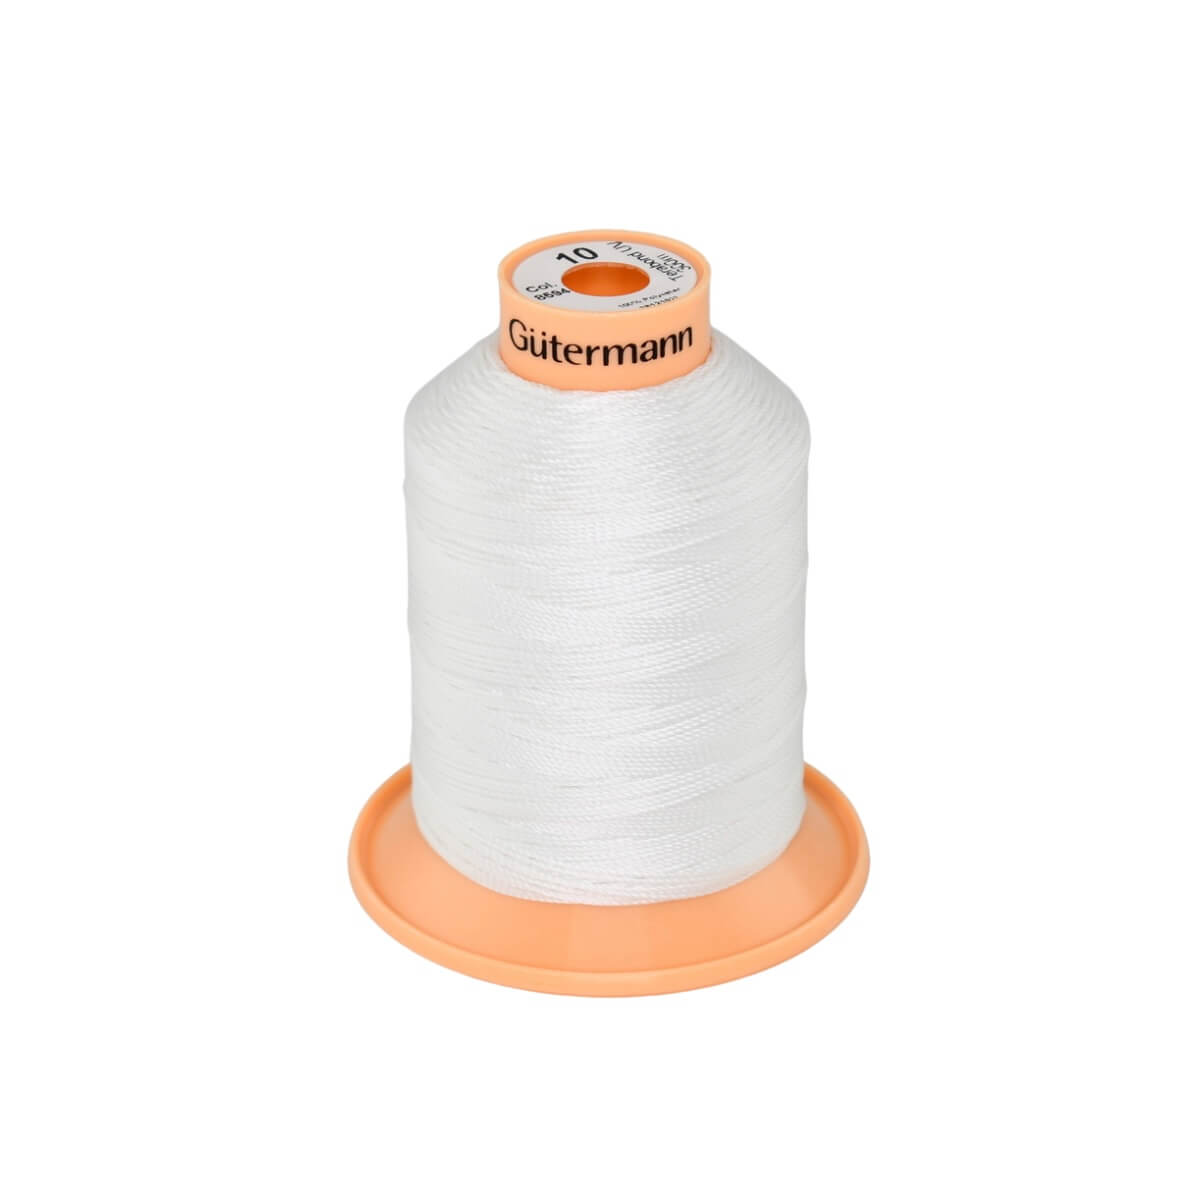 White Gutermann Terabond 10 UV stabilised Sewing Thread x 300m Grey